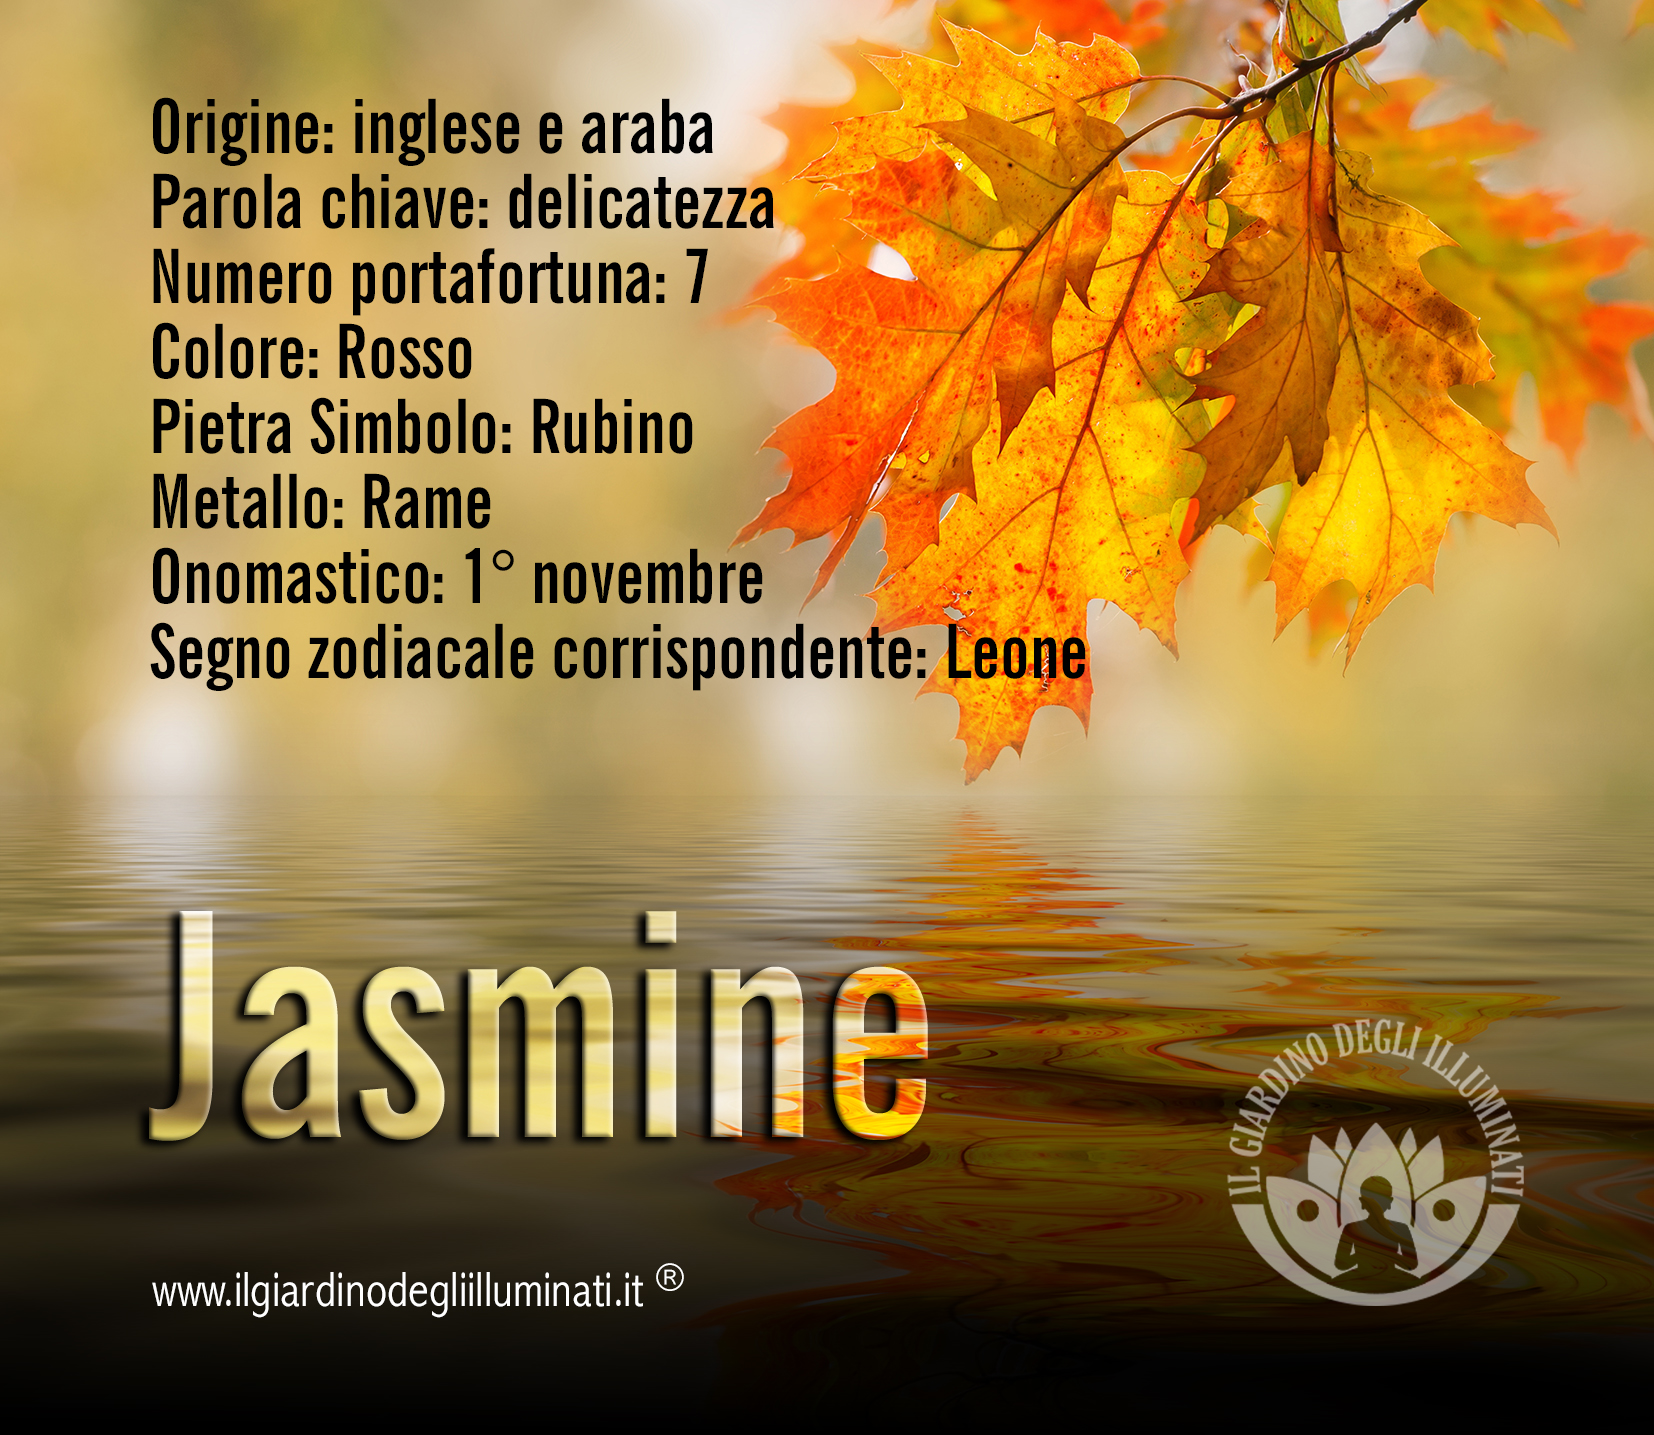 Jasmine significato e origine